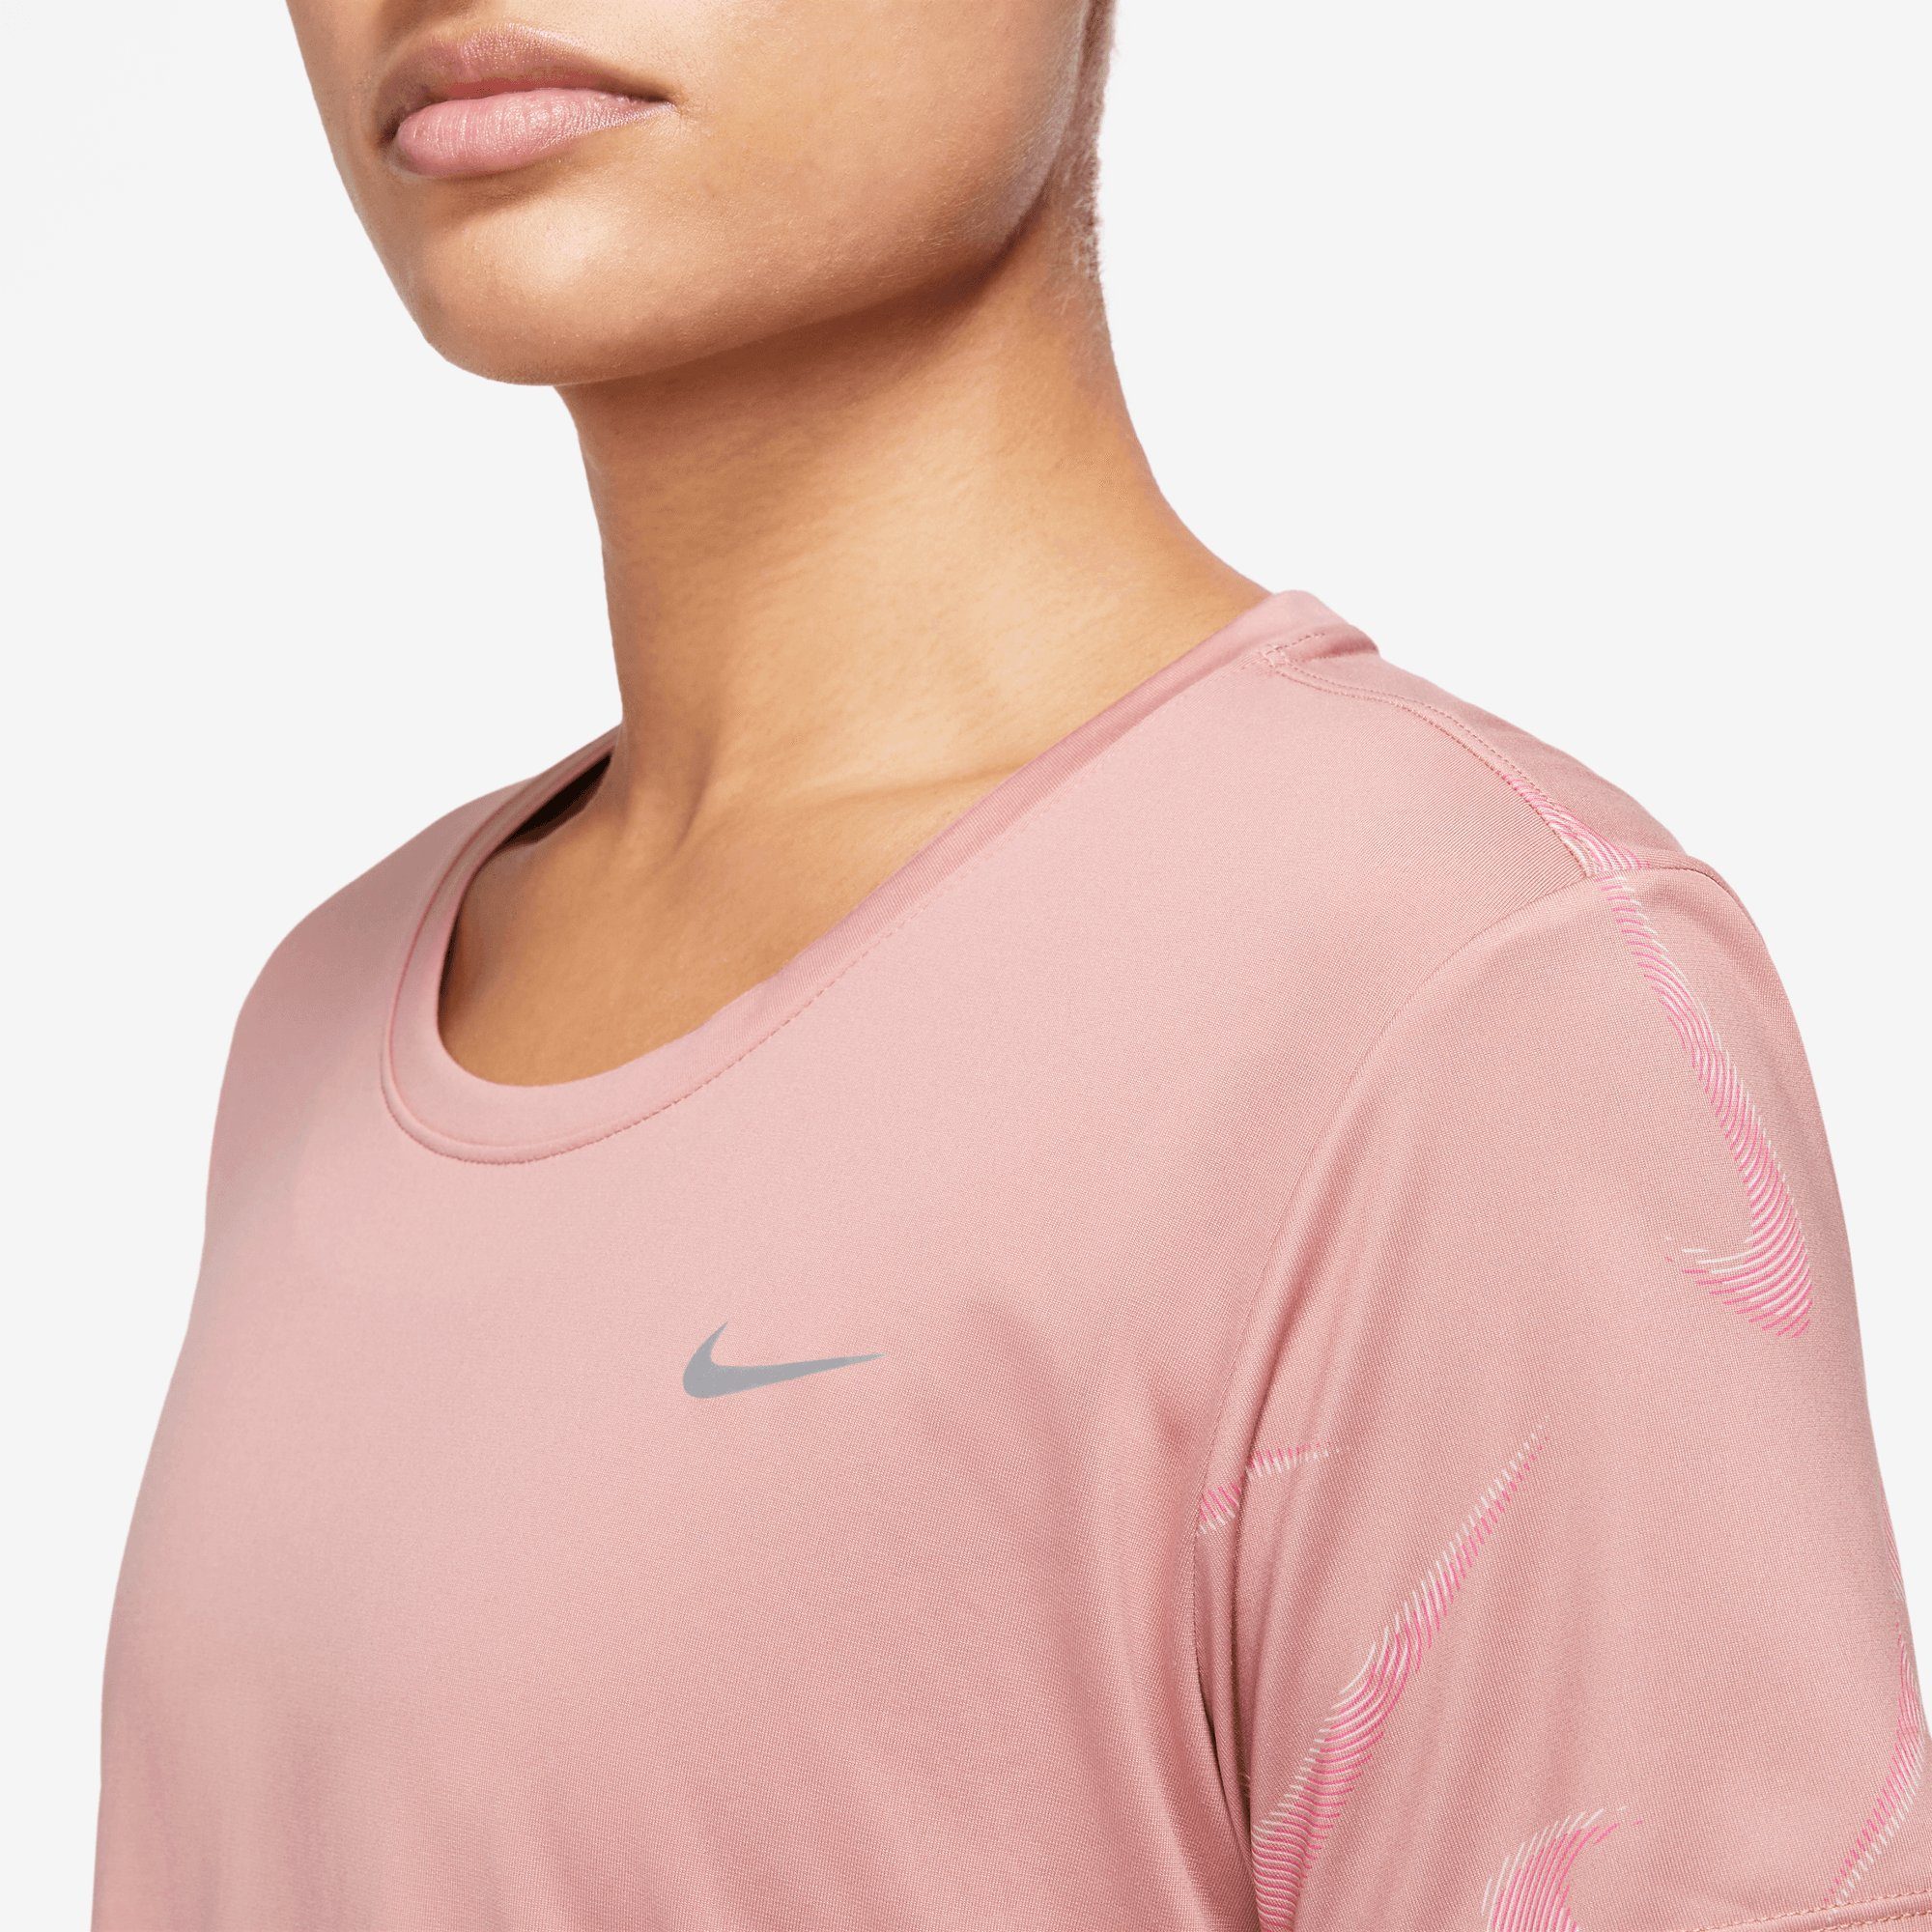 SWOOSH Nike STARDUST/REFLECTIVE Laufshirt SHORT-SLEEVE RED CROP DRI-FIT TOP WOMEN'S SILV PRINTED